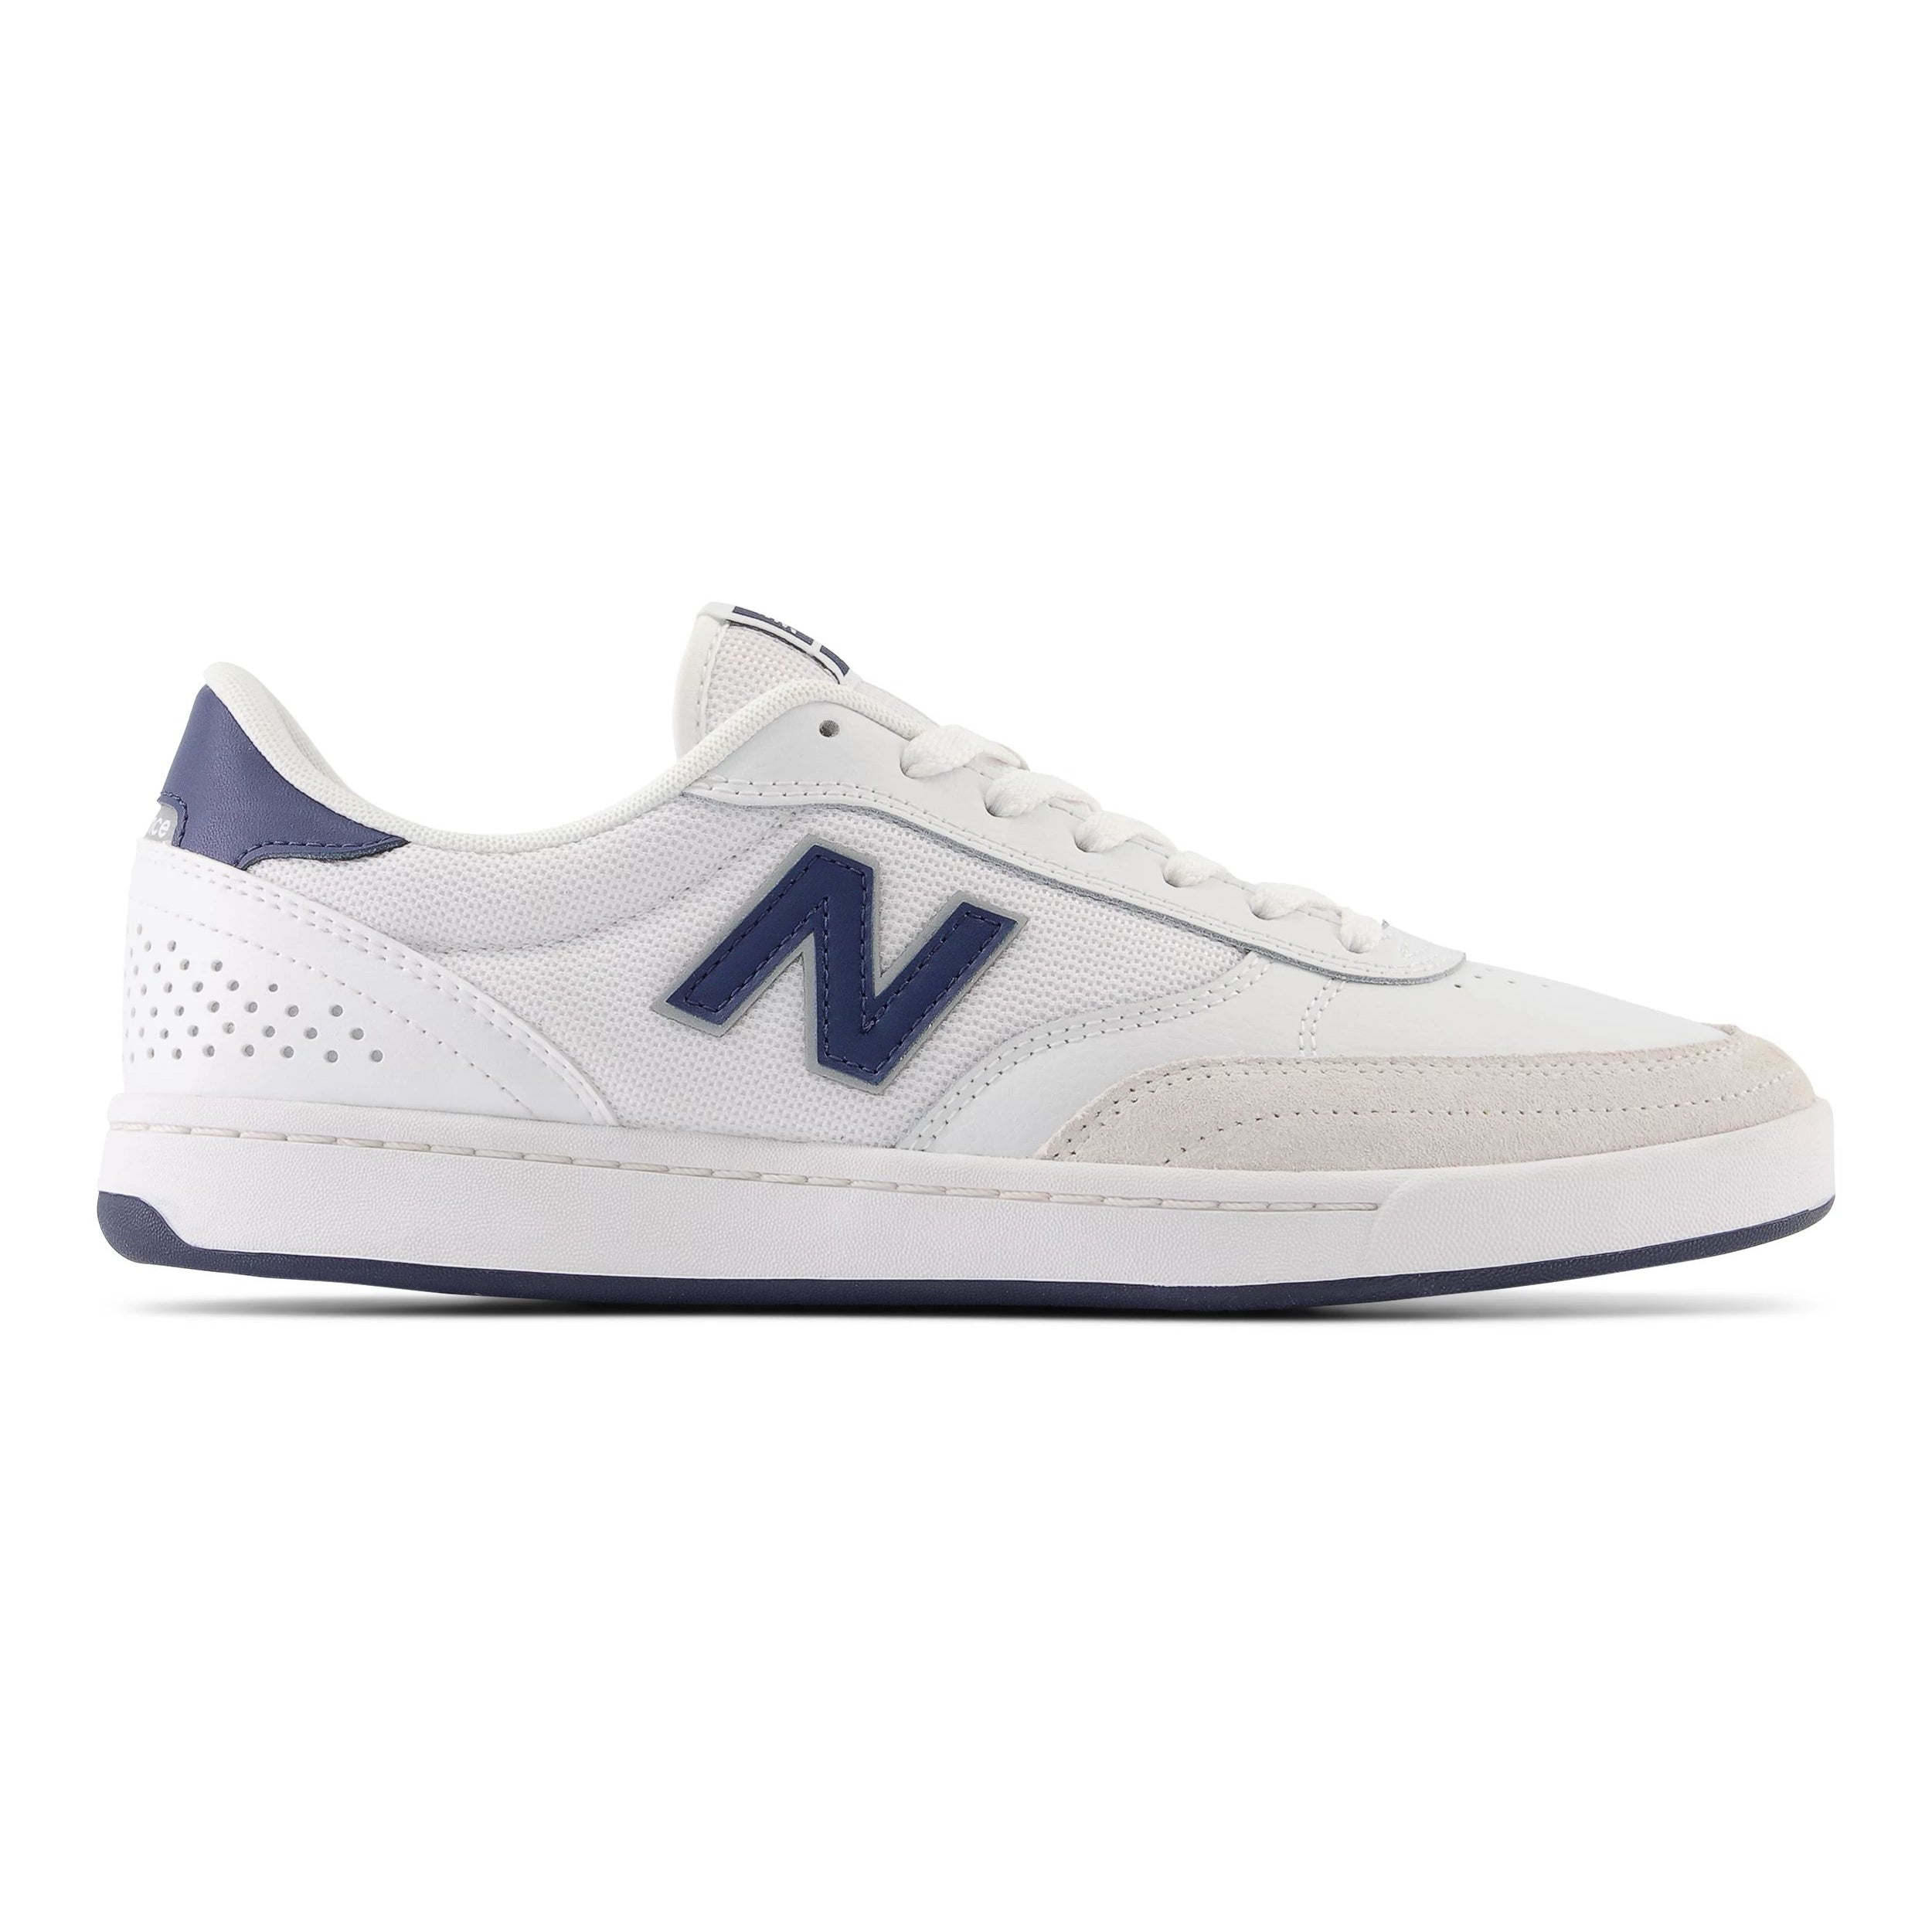 White/Navy NM440 NB Numeric Skate Shoe